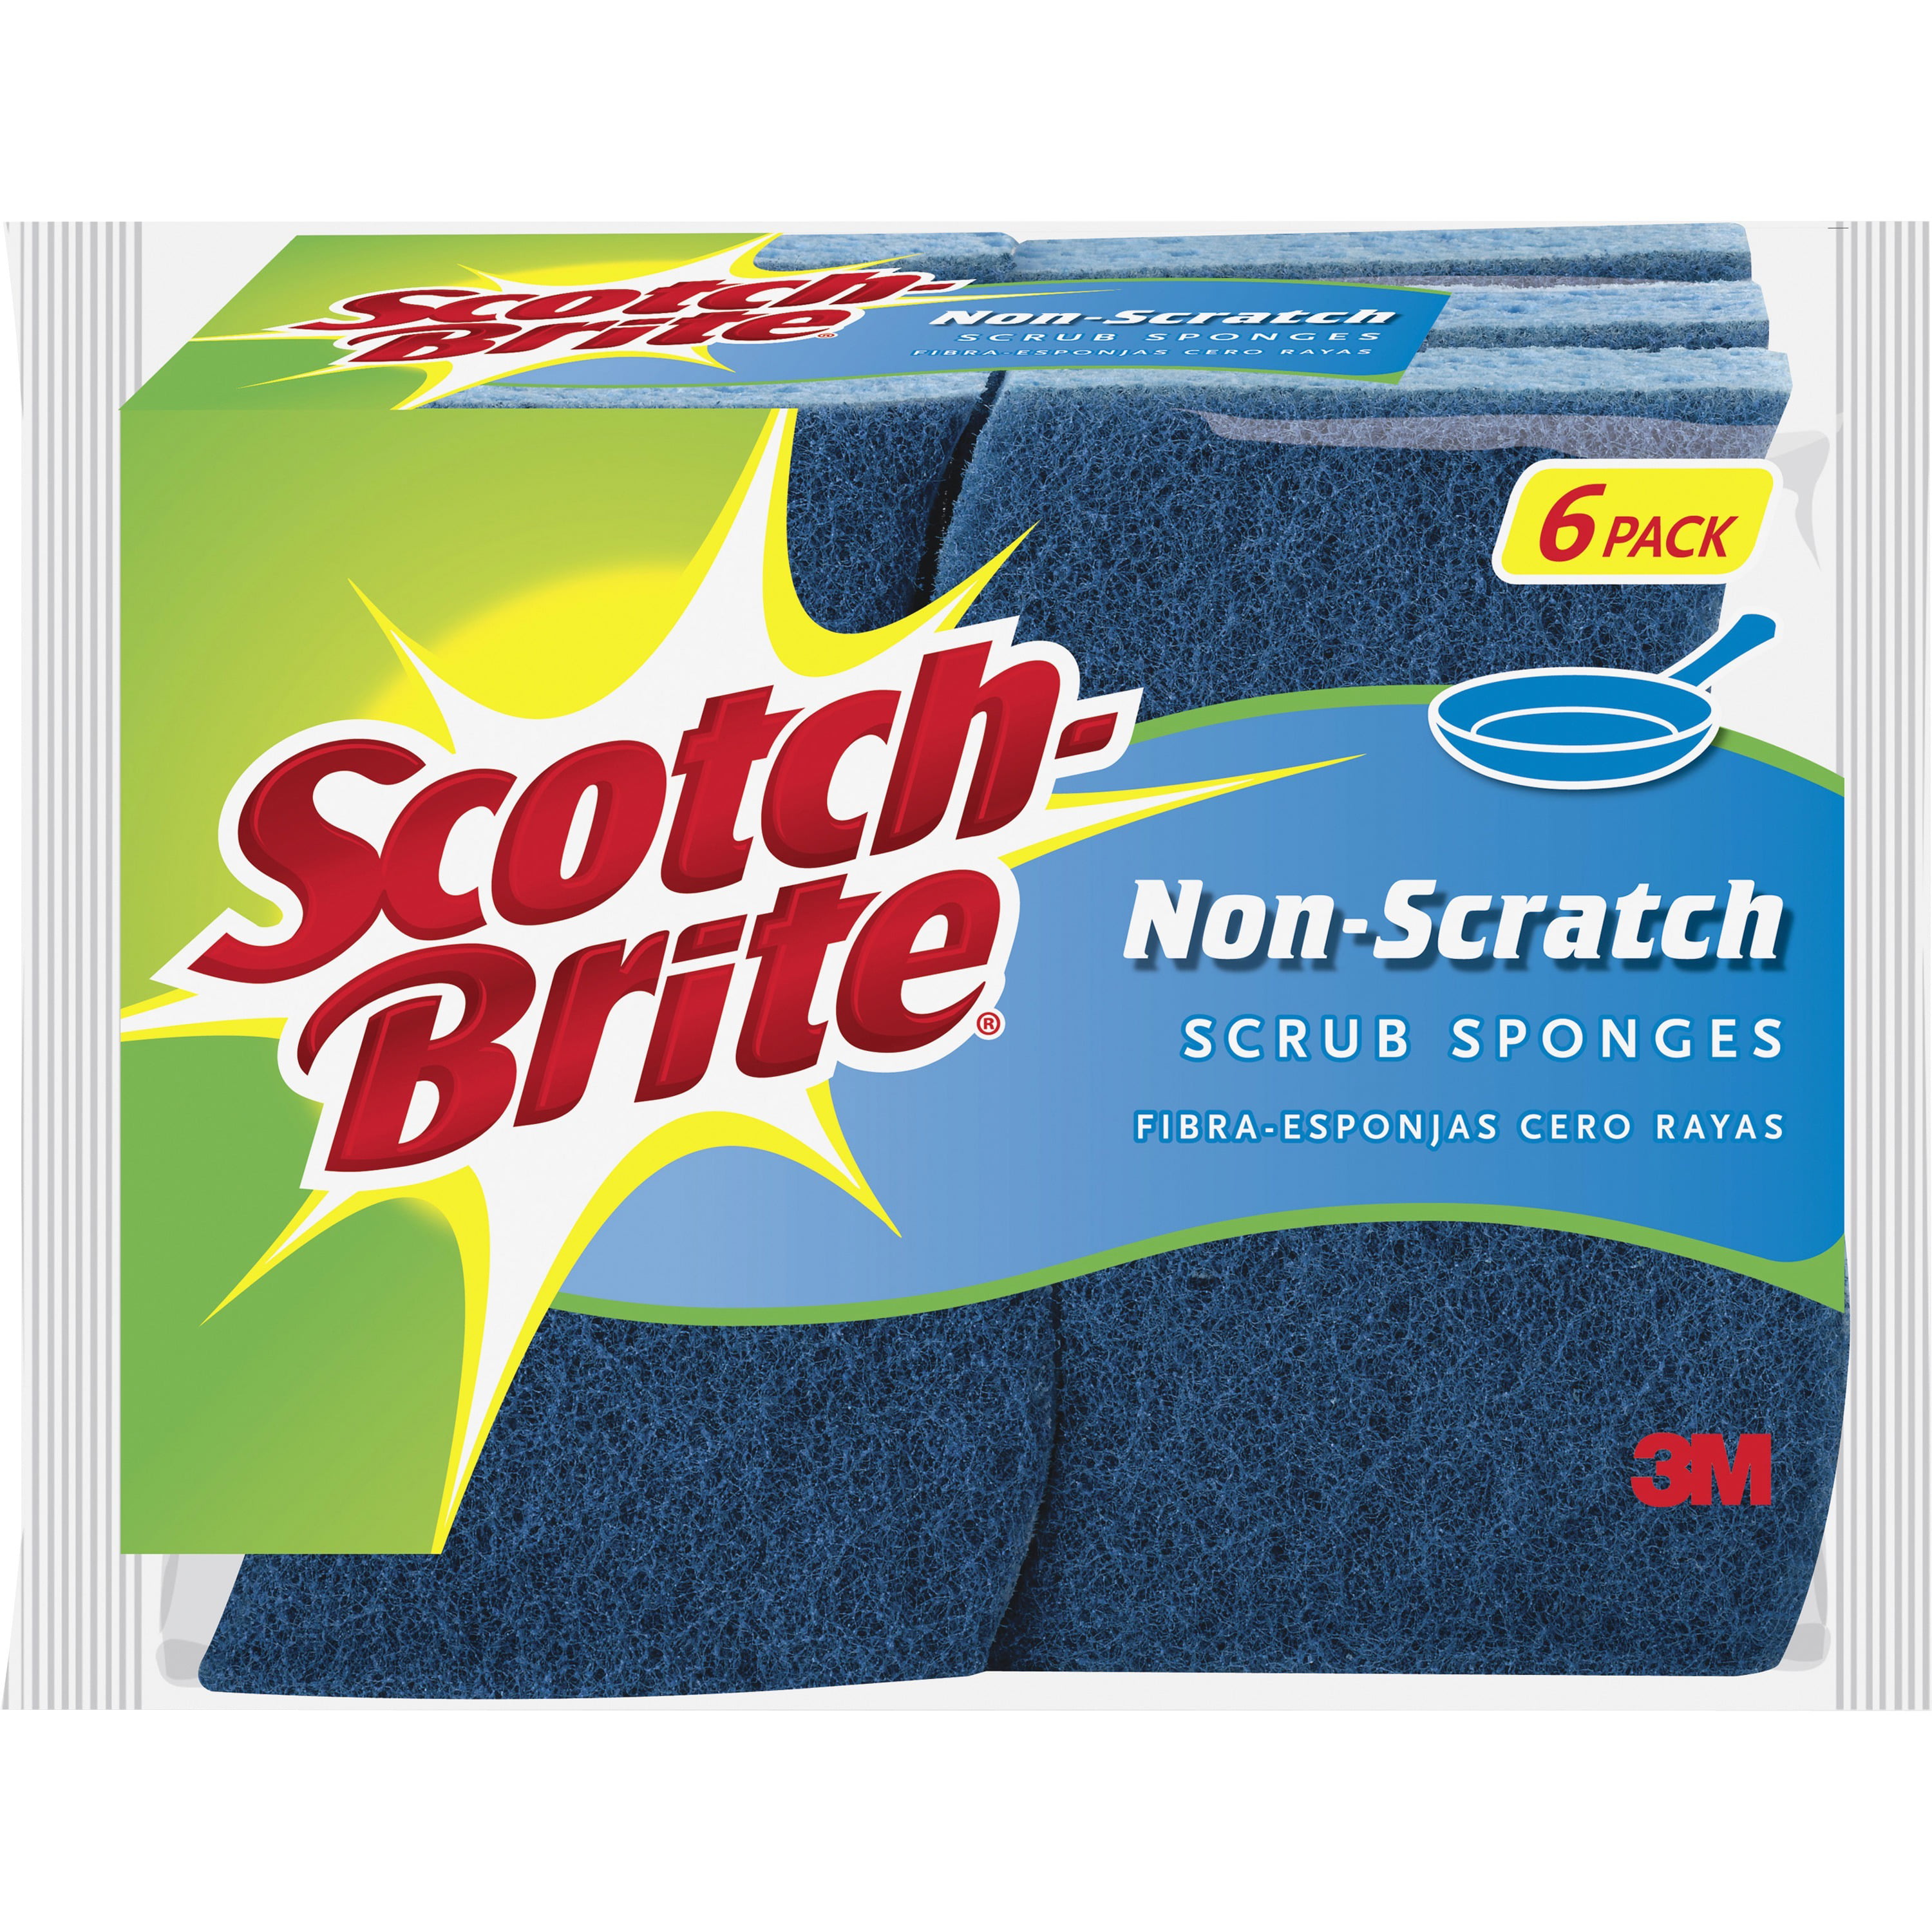 Scotch-Brite Non-Scratch Scrub Sponges 6 Scrub Sponges Lasts 50% Longer than 